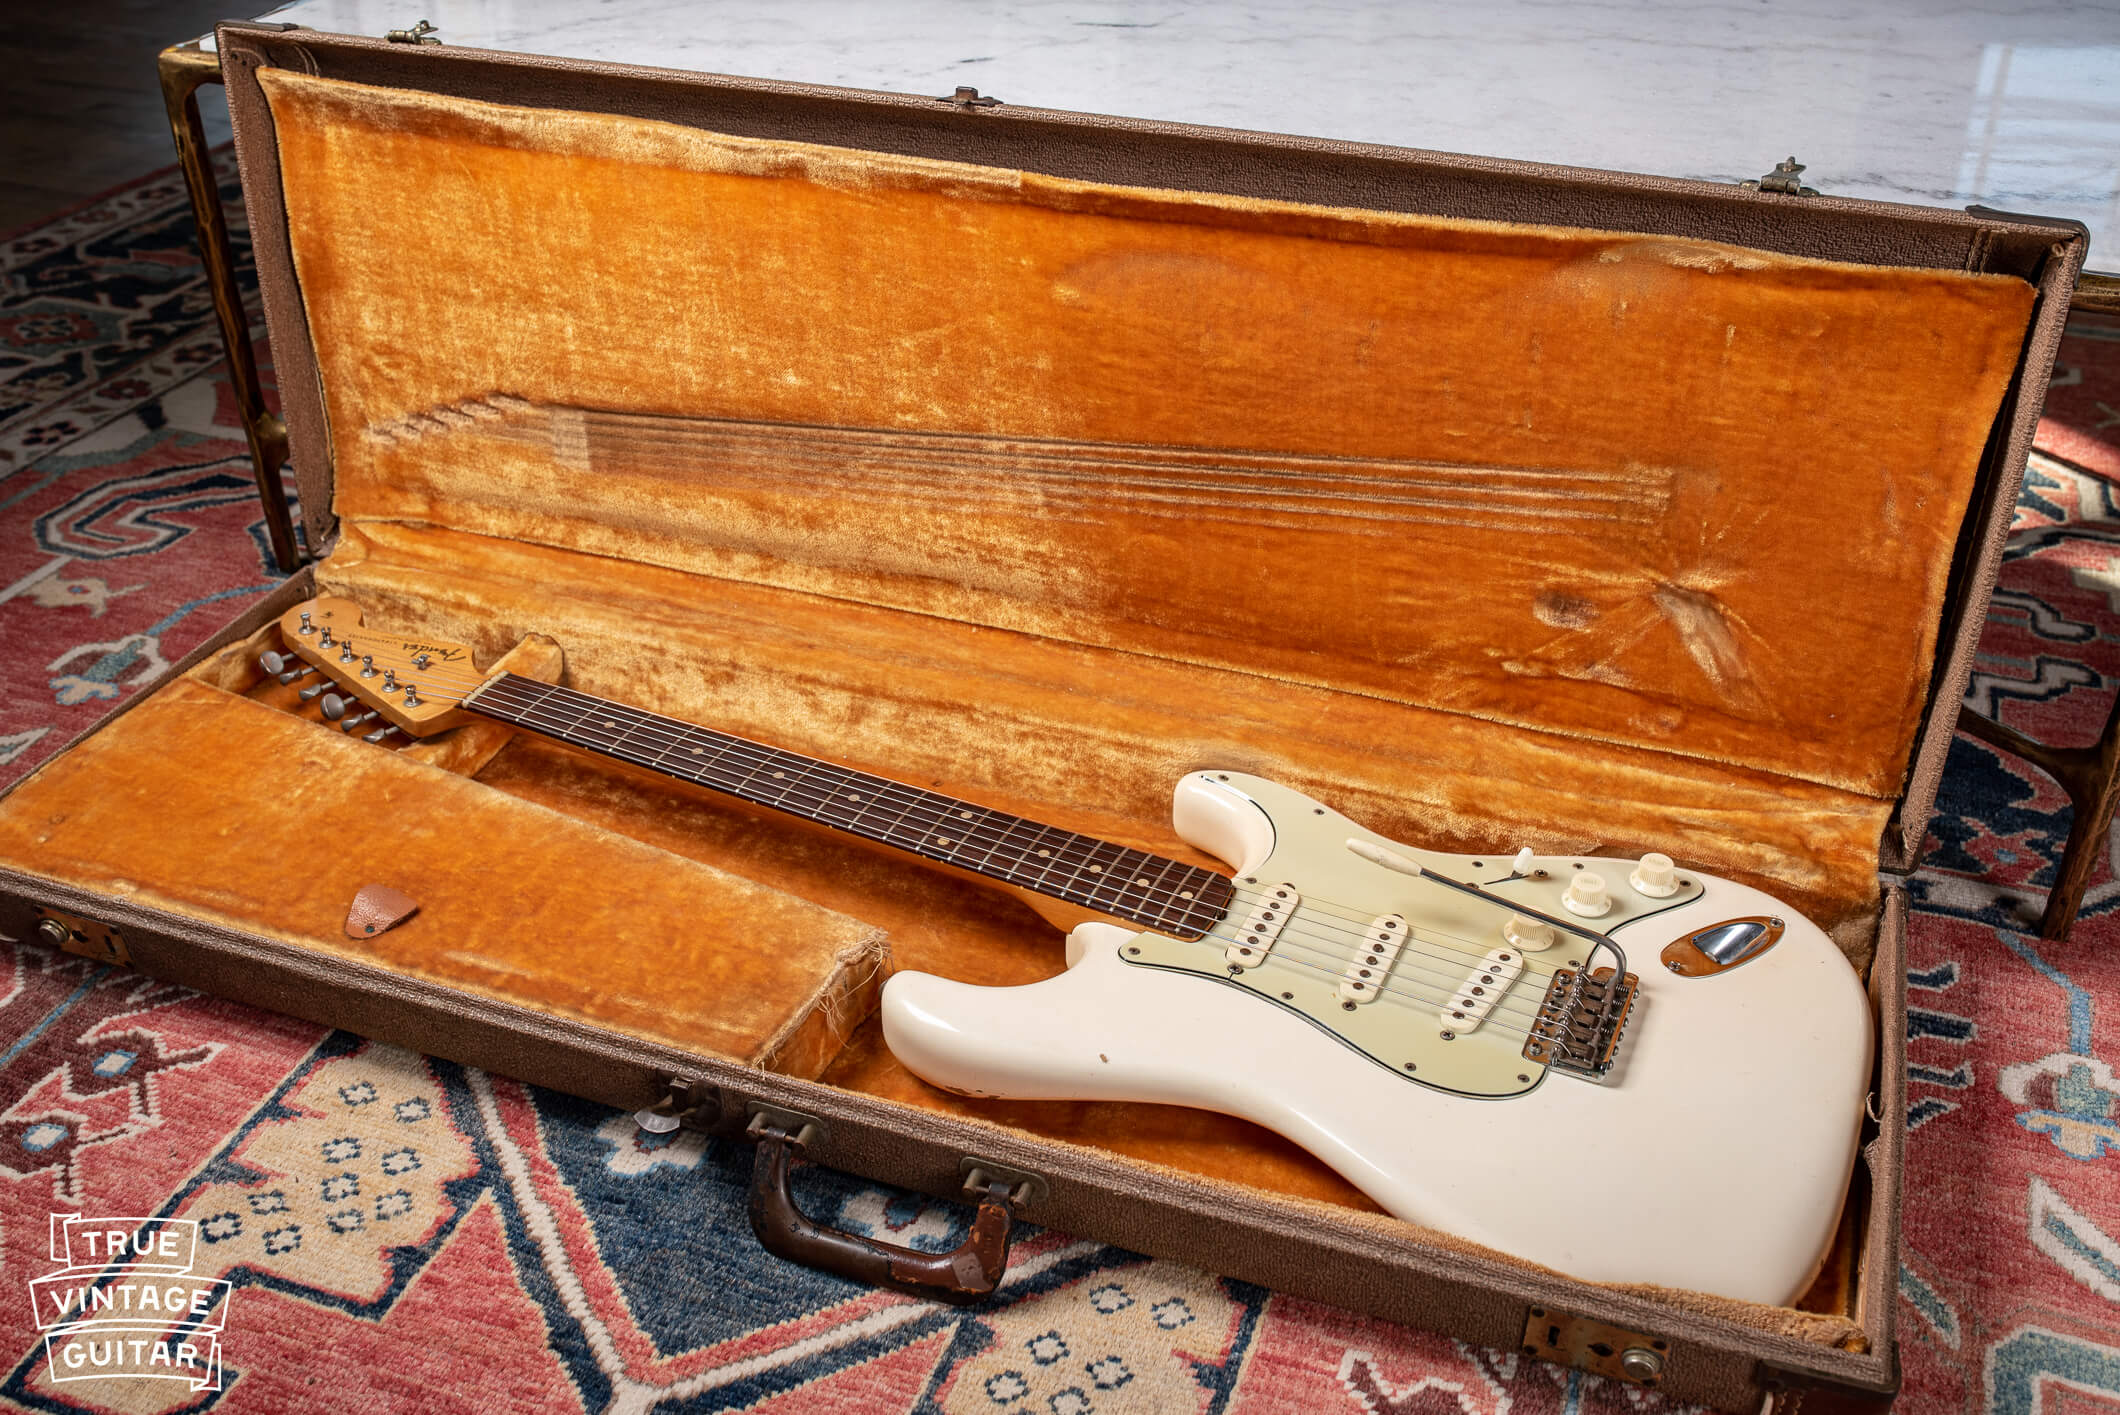 1961 Fender Stratocaster White in original case with orange lining